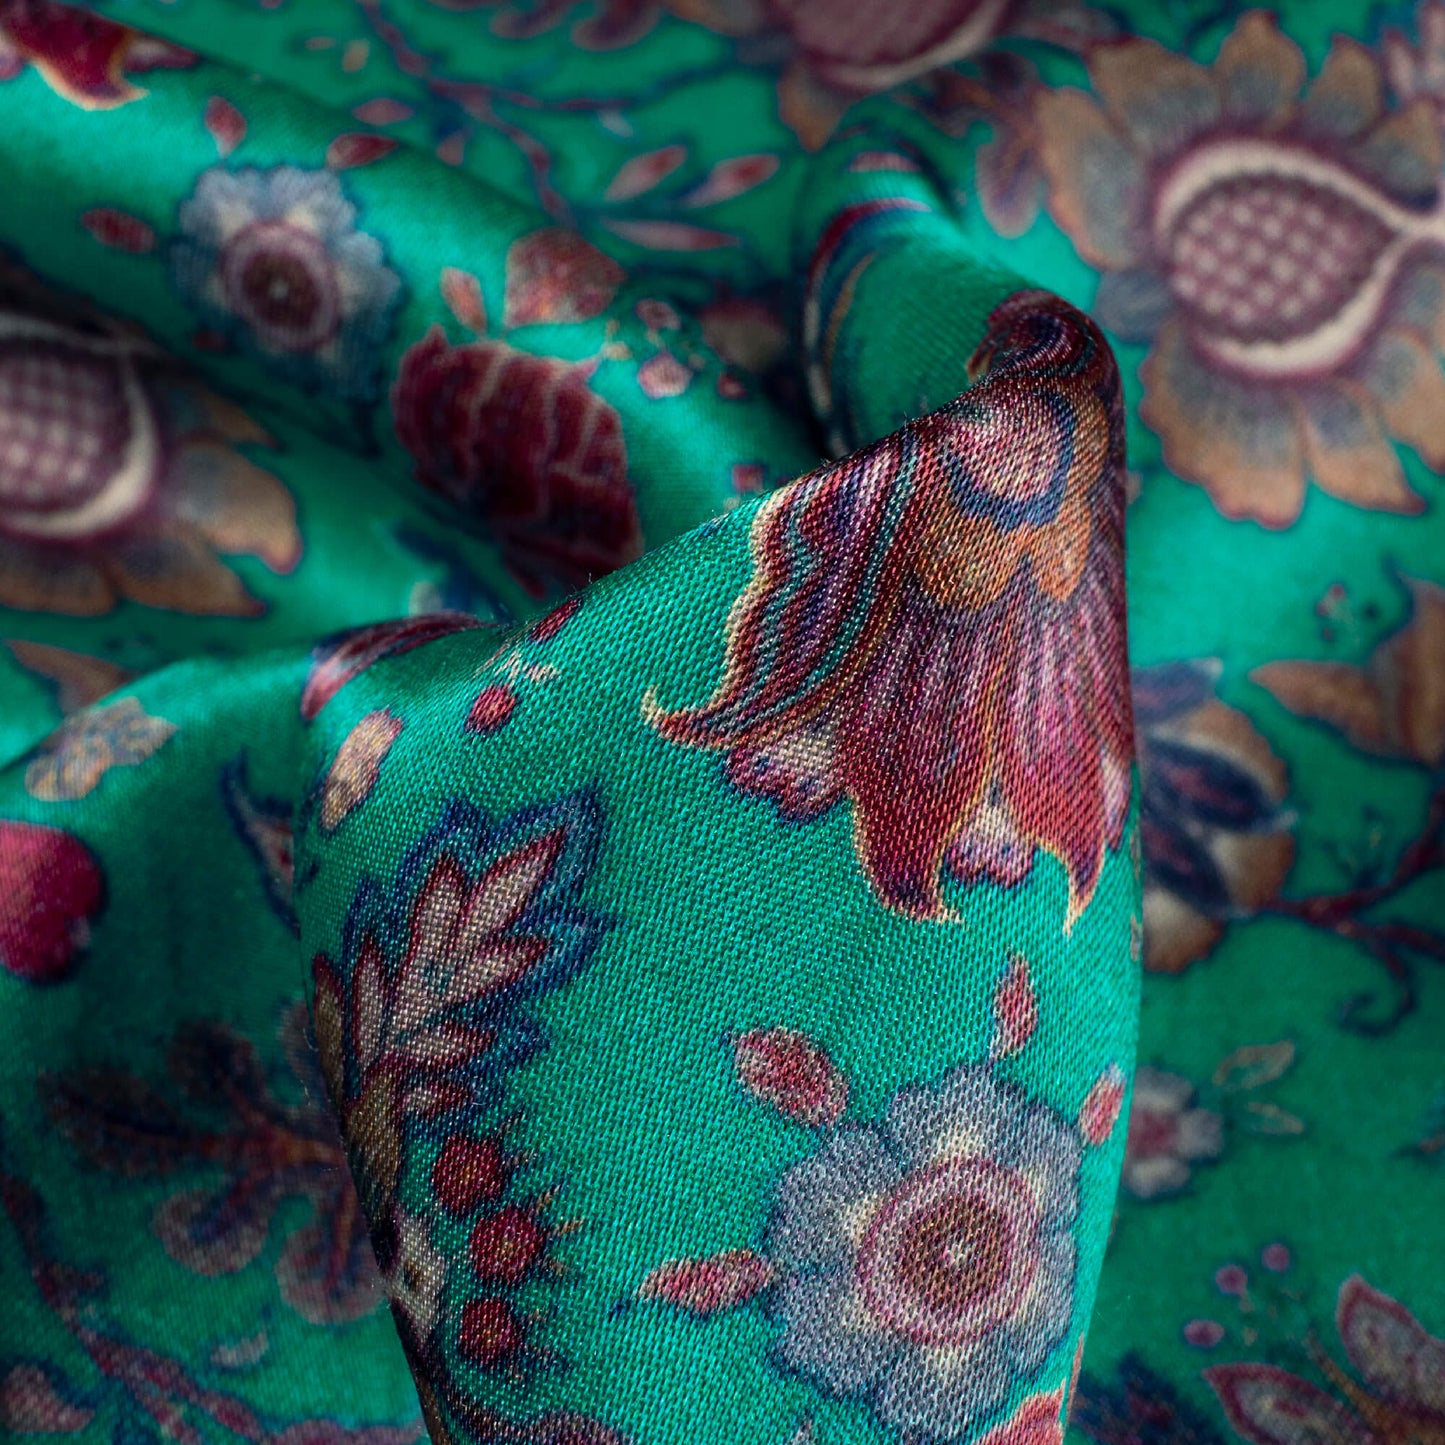 Dark Turquoise And Red Floral Pattern Digital Print Viscose Gaji Silk Fabric